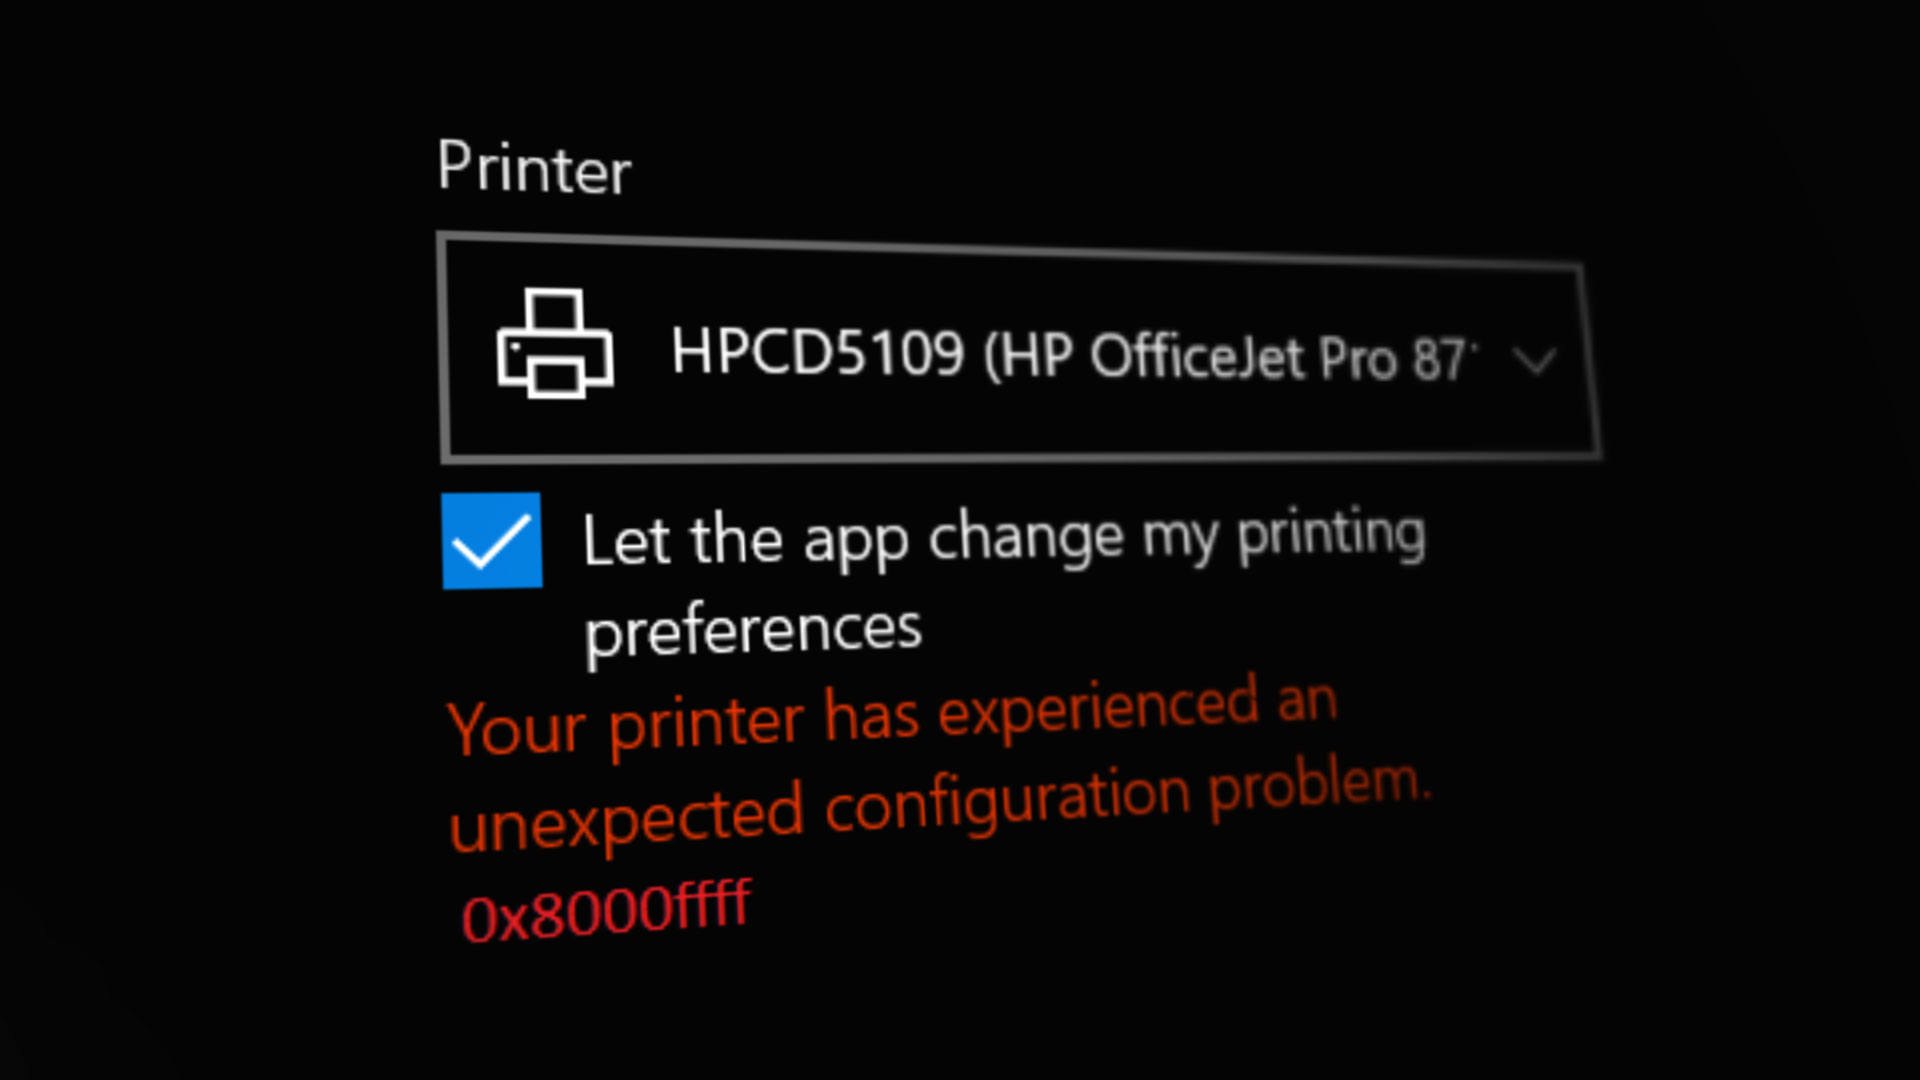 Printer has Experienced Configuration Problem